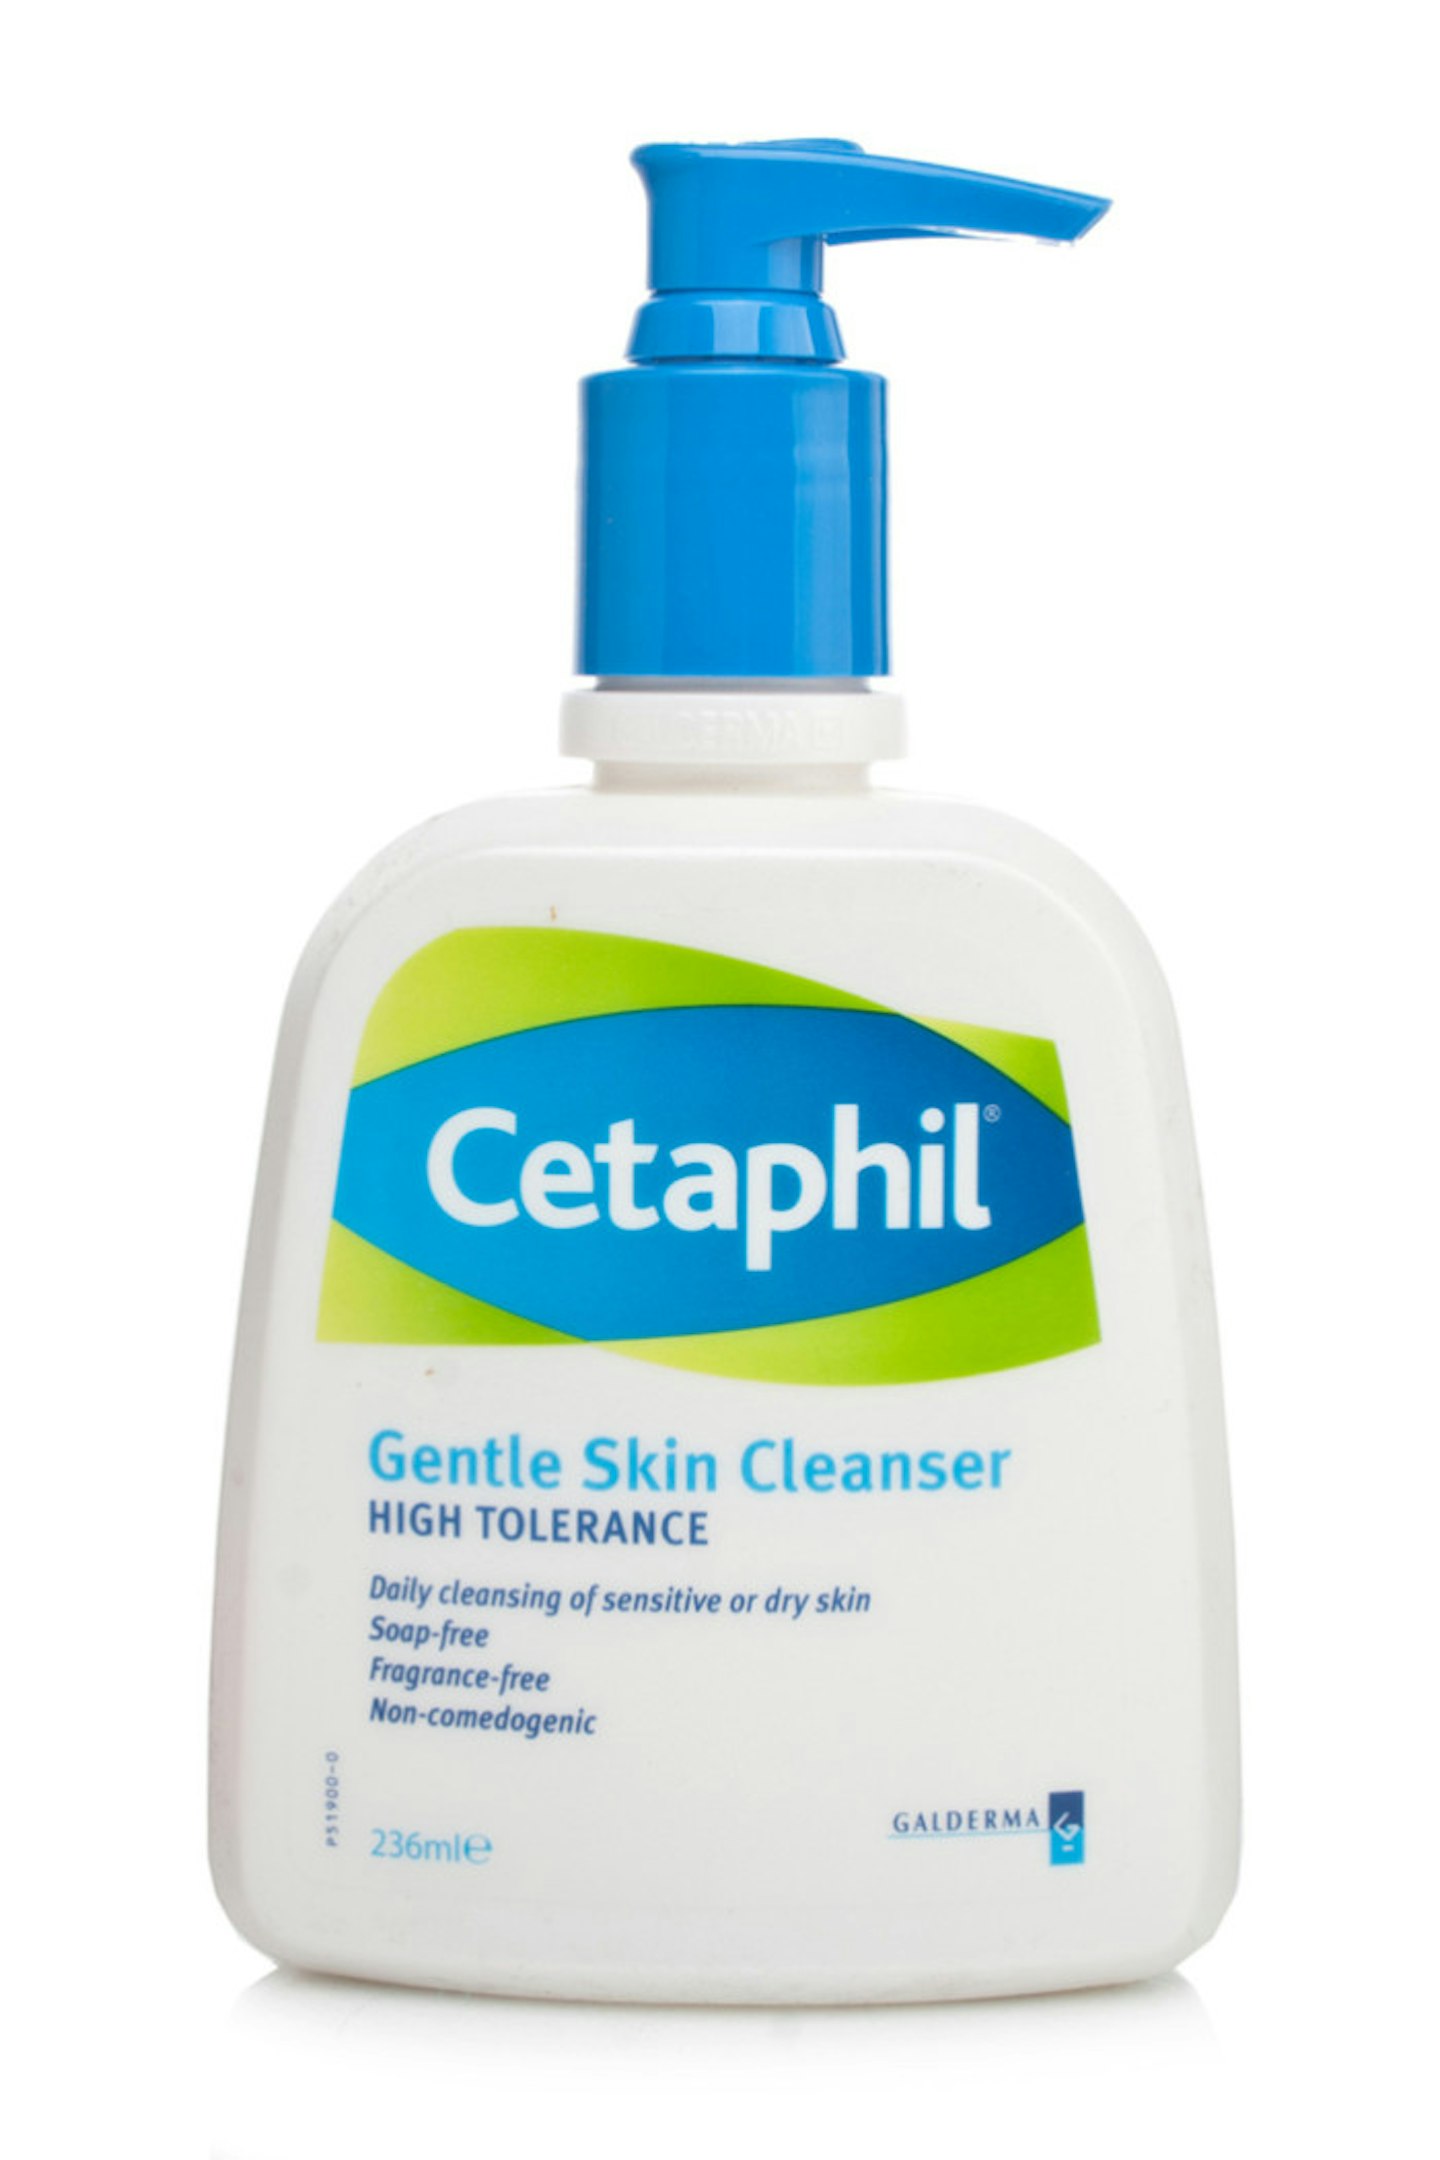 Cetaphil Gentle Skin Cleanser, £8.99